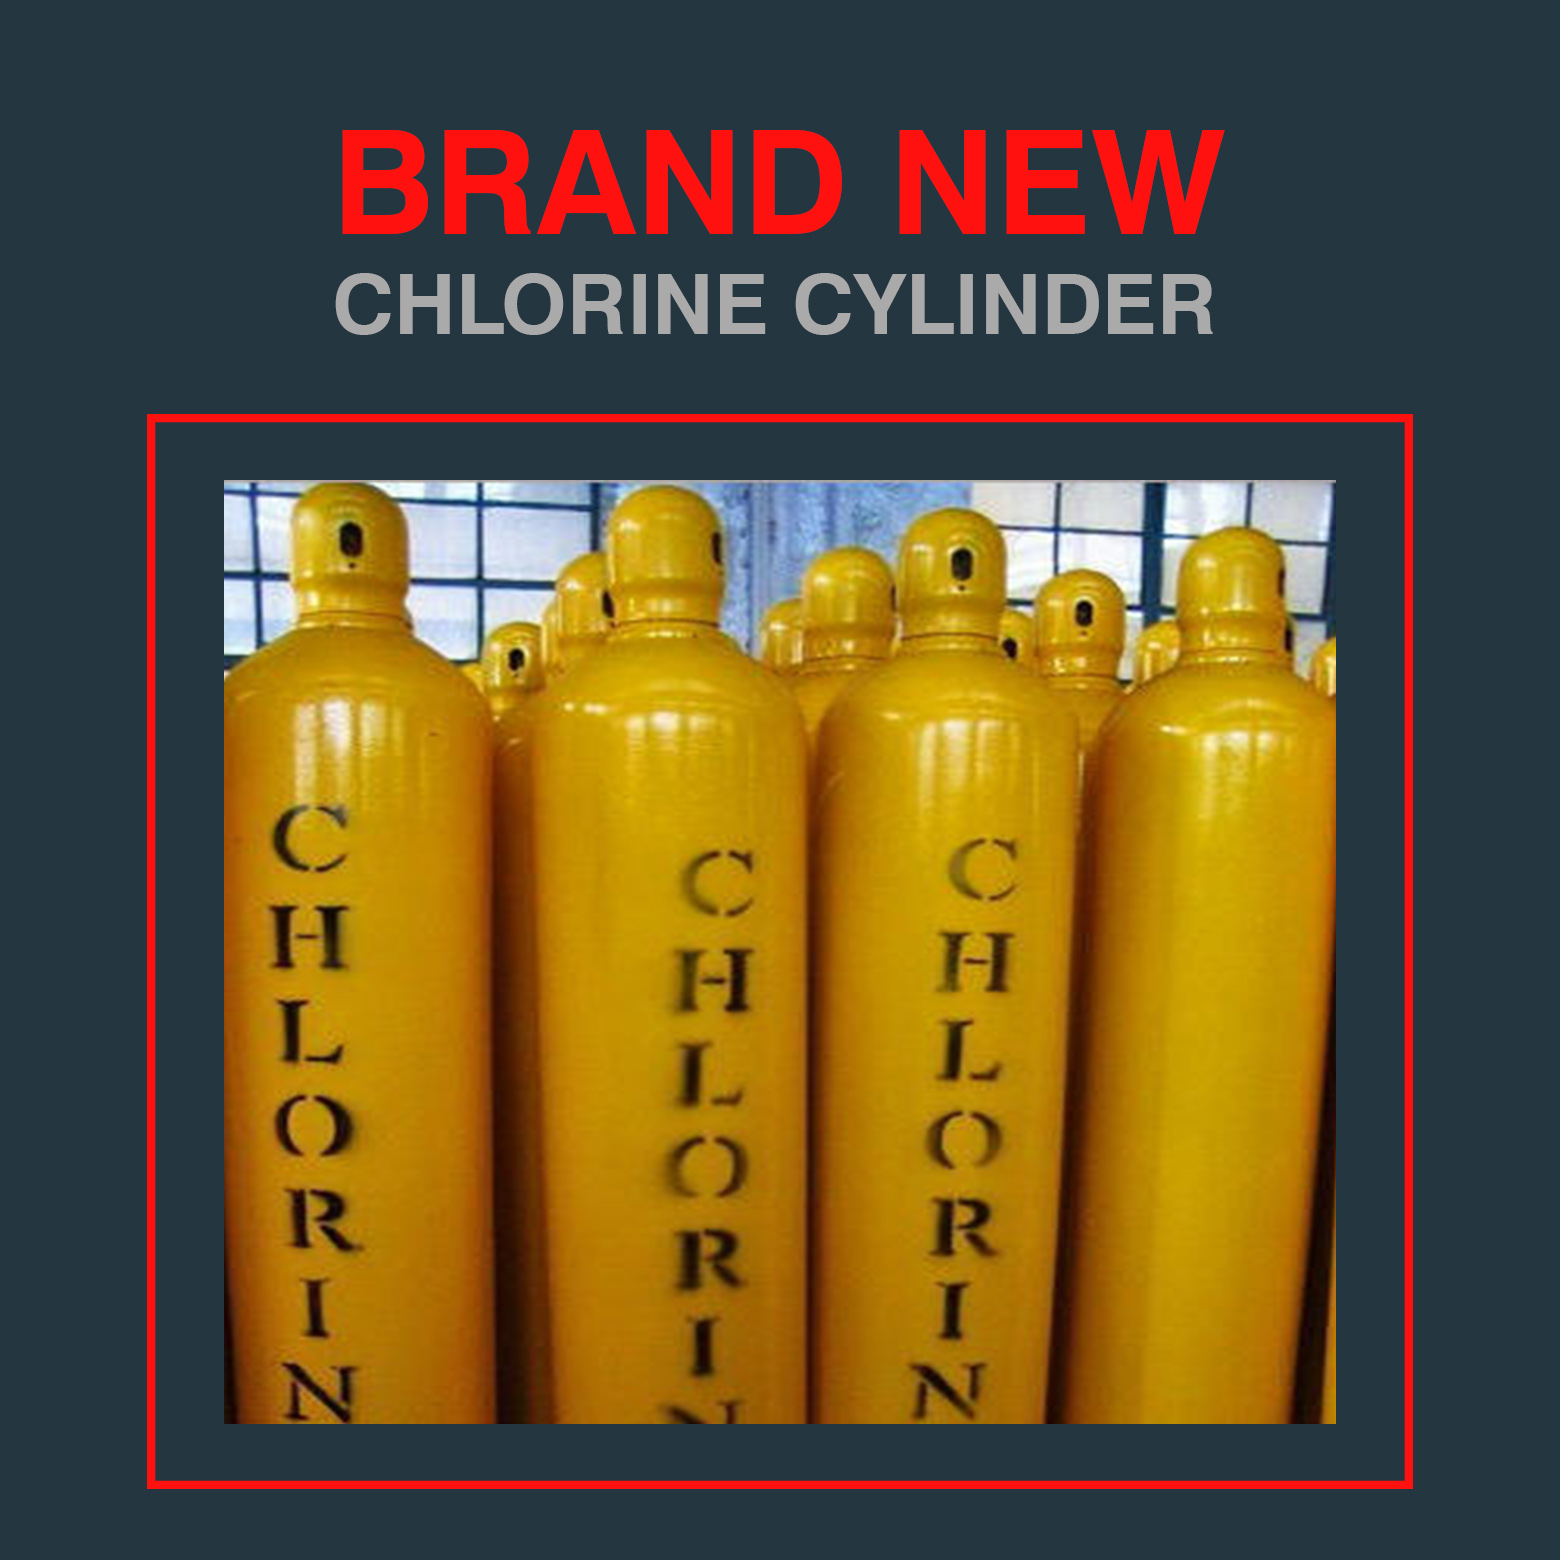 Brand New Chlorine Cylinders